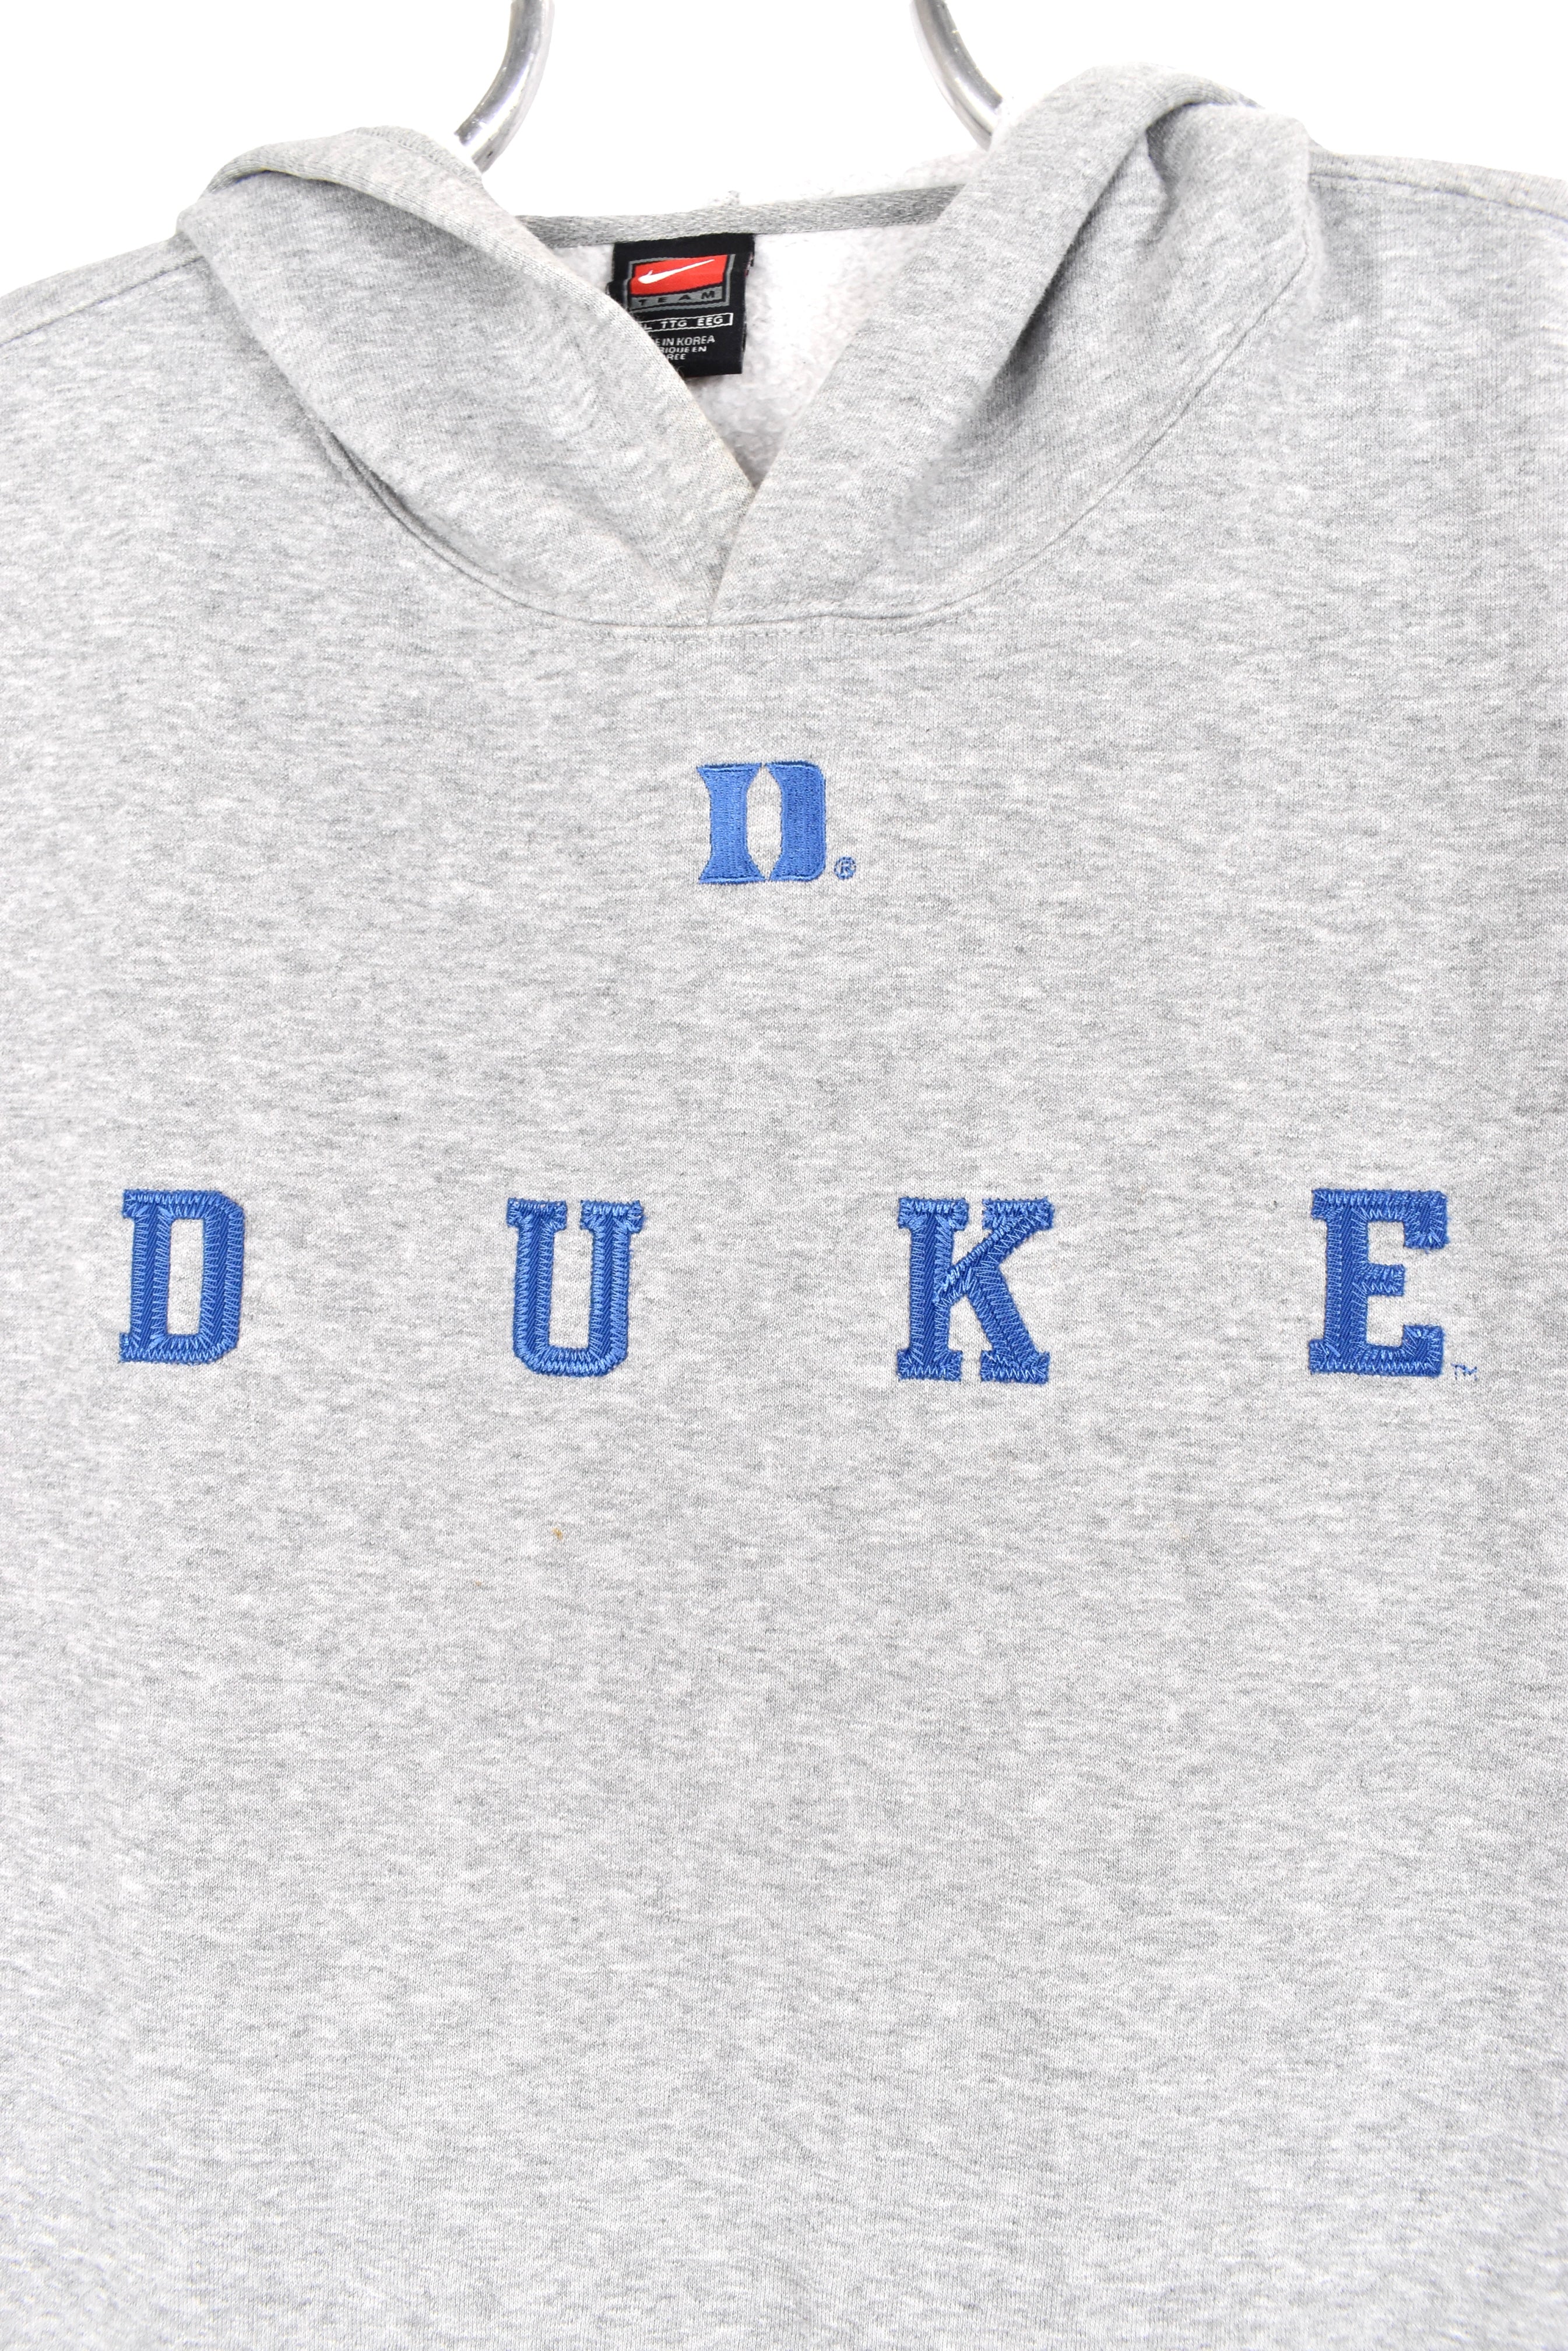 Vintage Duke University hoodie, grey embroidered sweatshirt - AU XXL COLLEGE